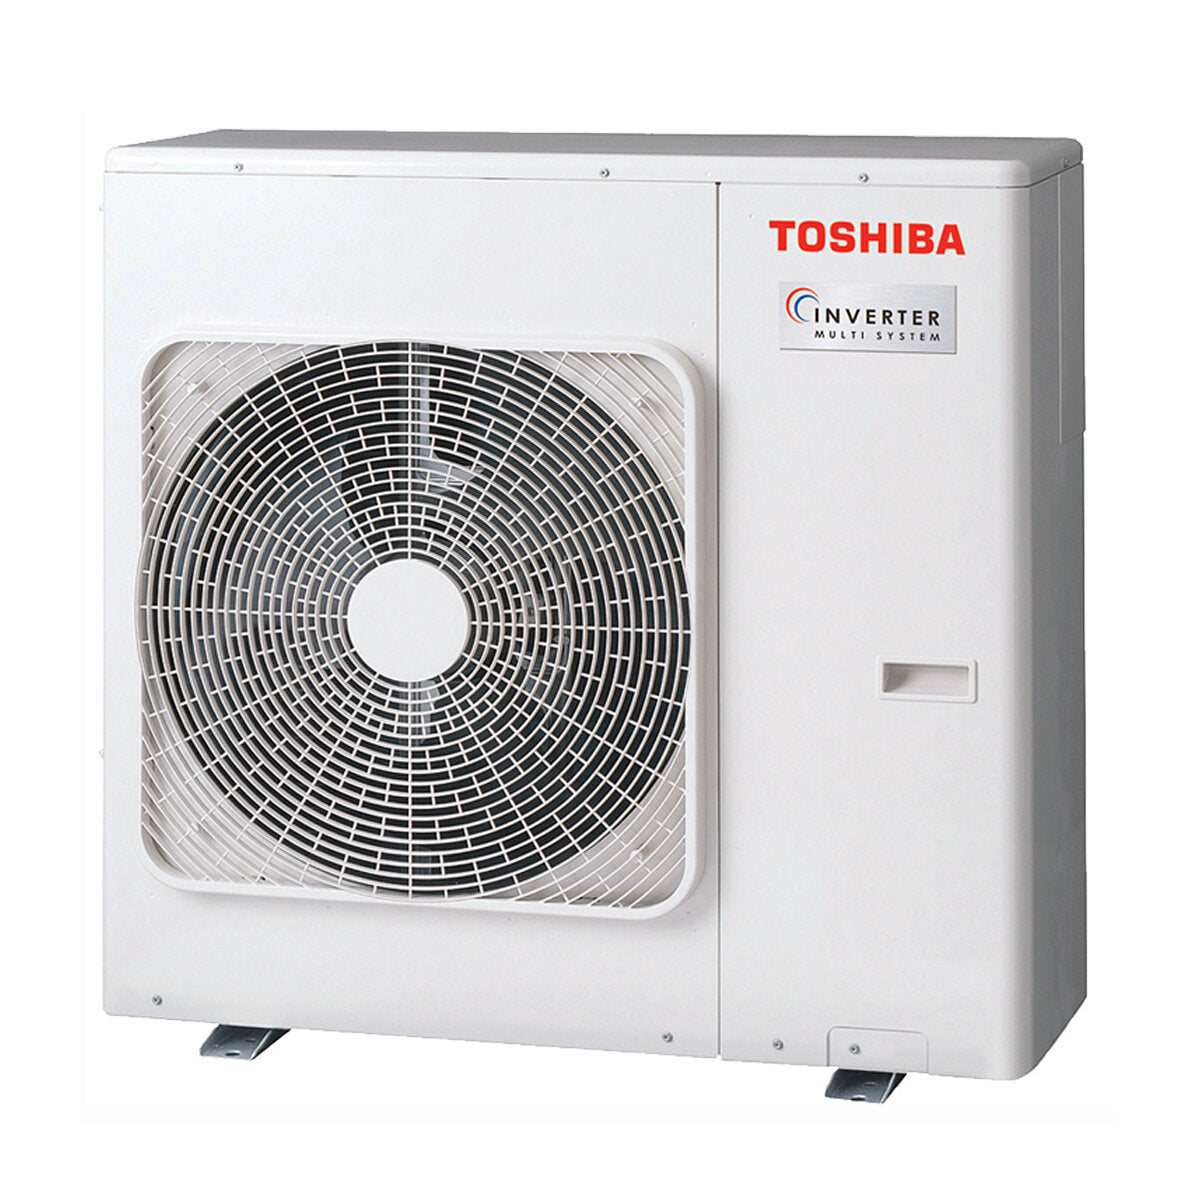 Toshiba NOUVEAU SEIYA climatiseur penta split 9000 + 9000 + 9000 + 12000 + 12000 BTU onduleur A ++ unité extérieure 10,0 kW